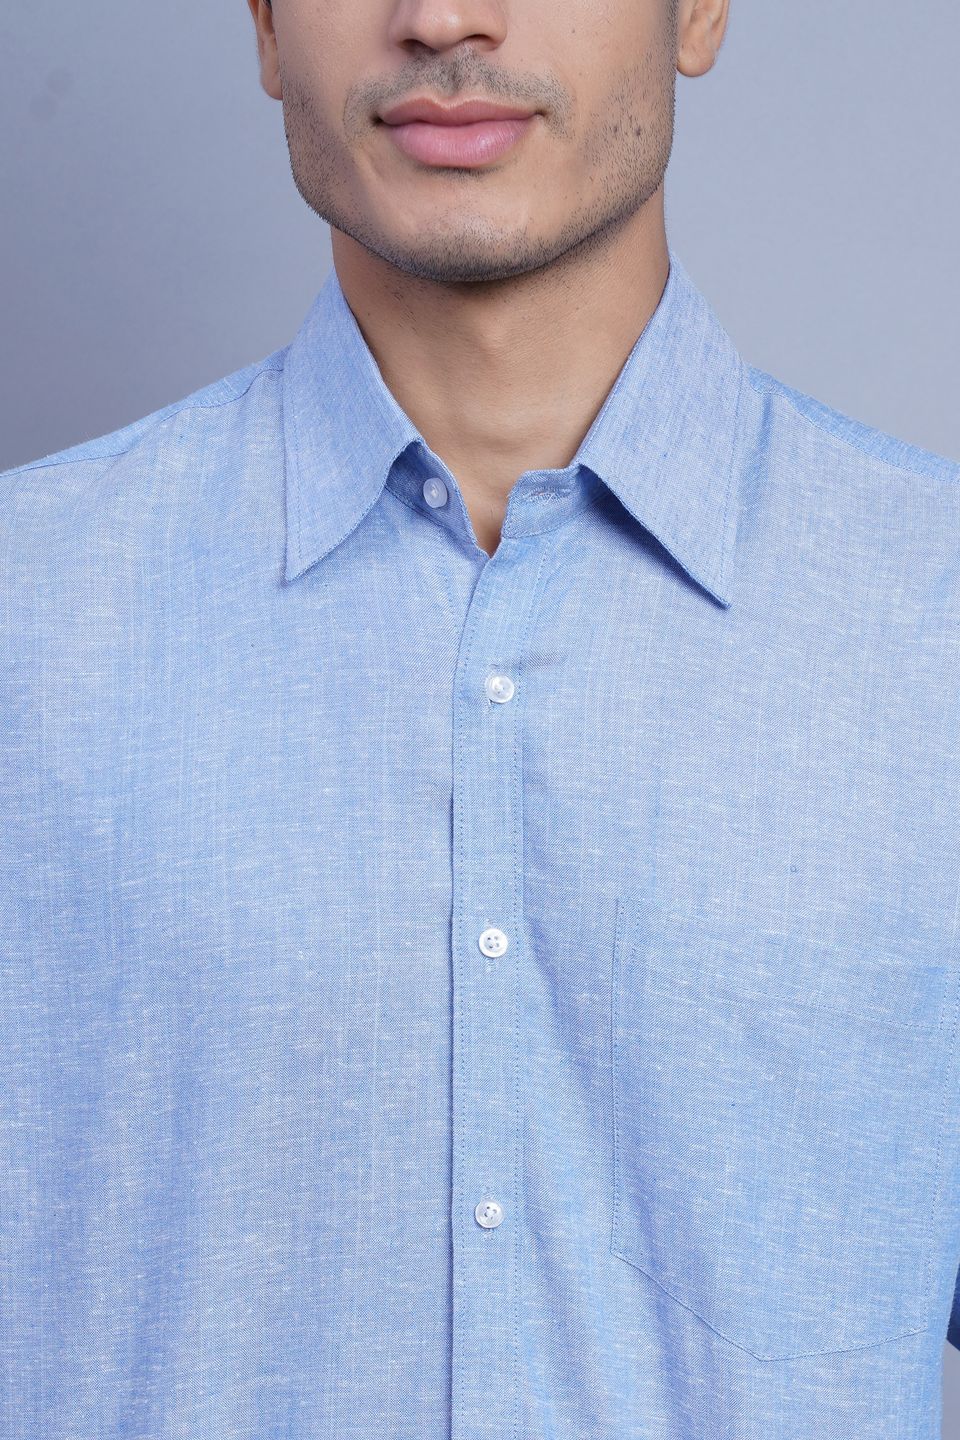 WINTAGE Men's Linen Casual Shirt: Blue 1